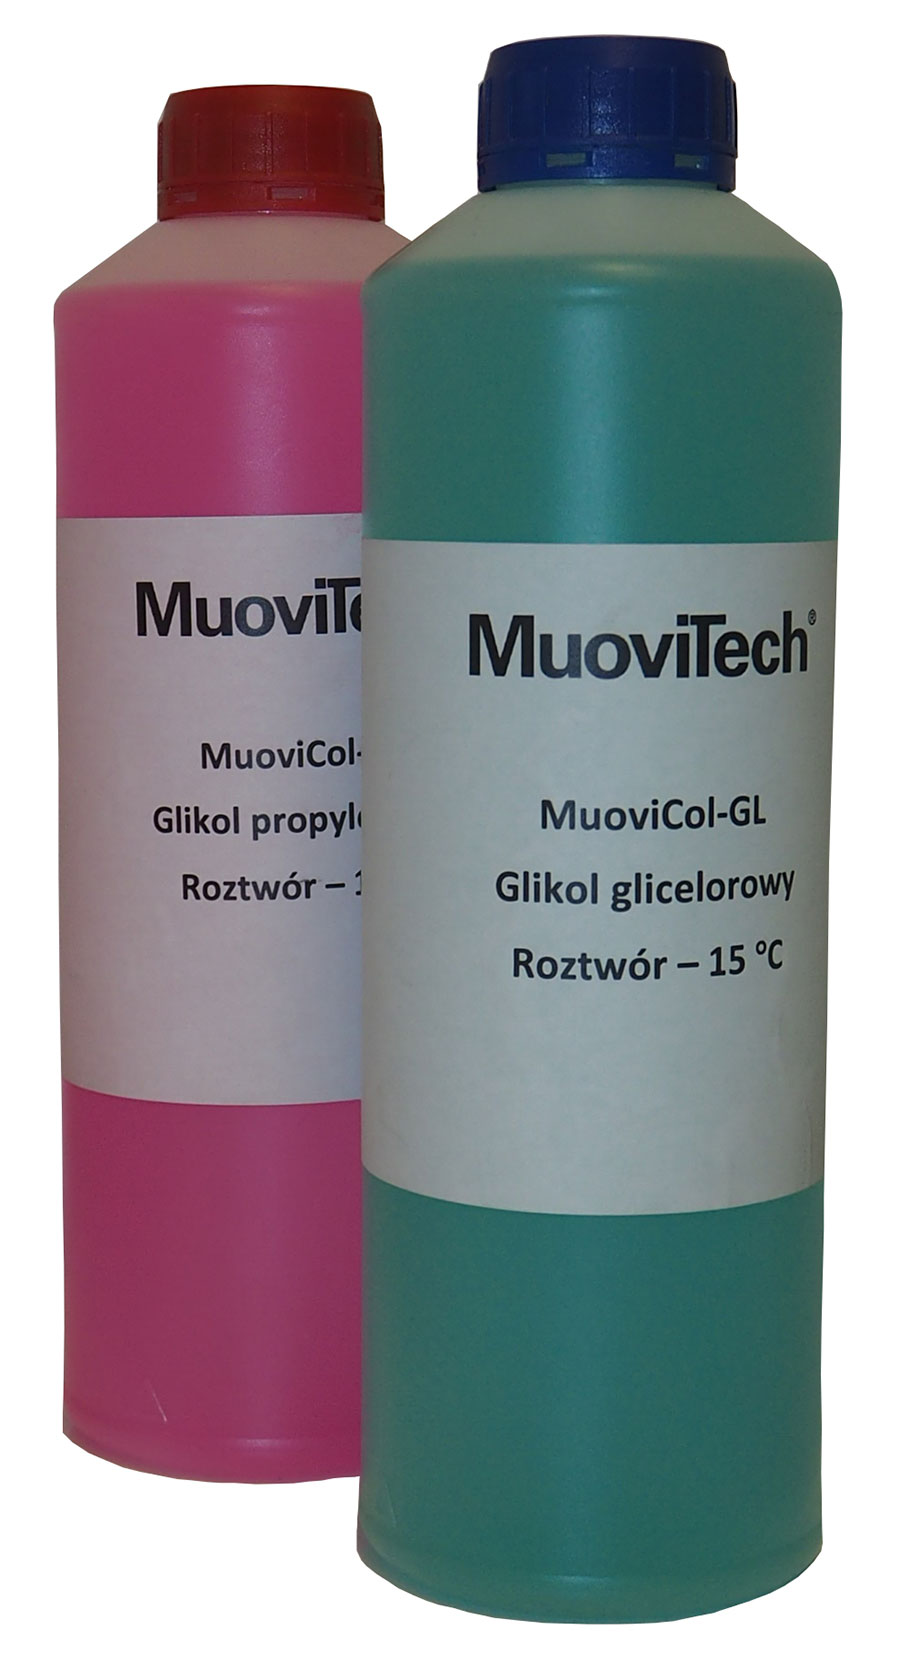 MuoviCol-G